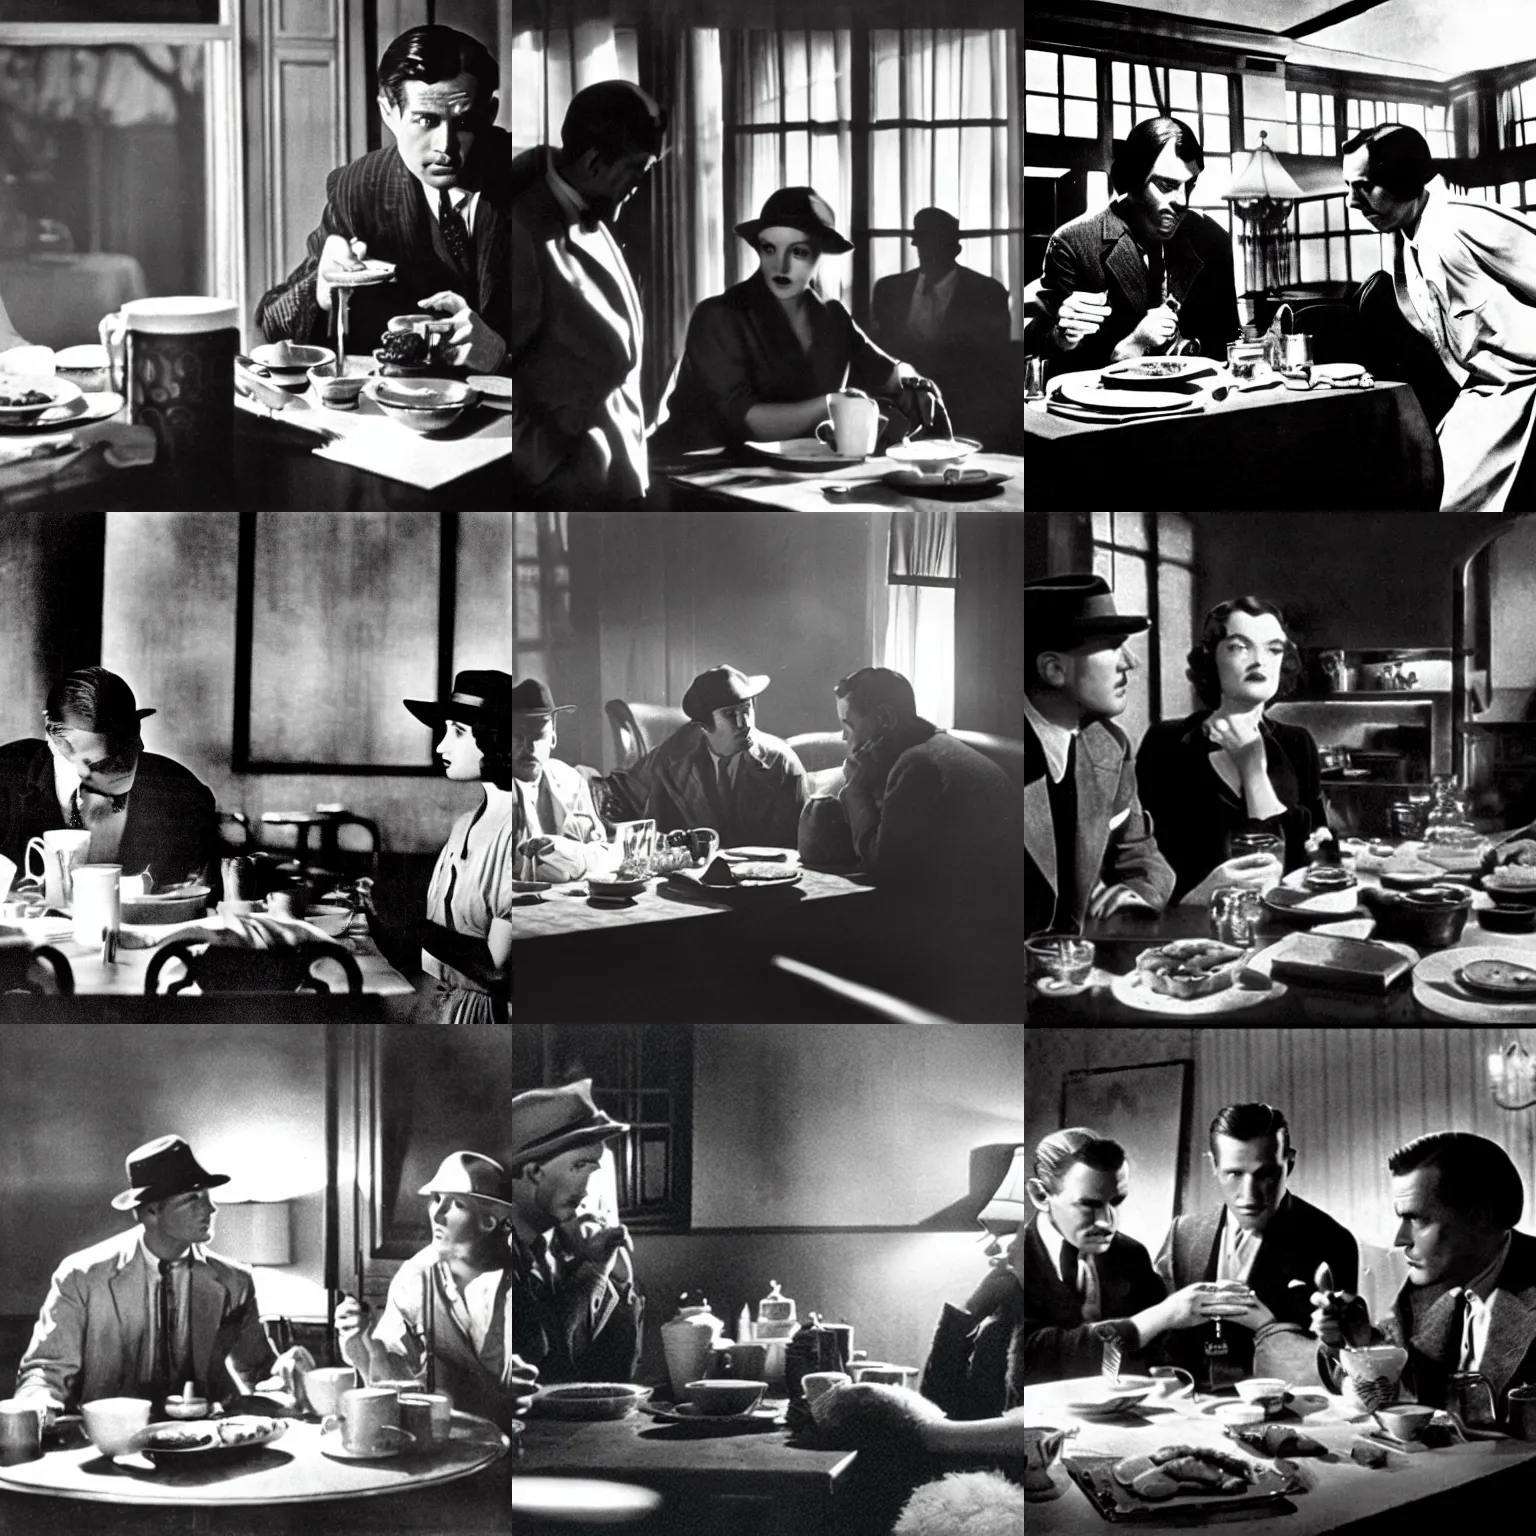 Prompt: a breakfast scene from a 1 9 3 0 film noir, moody, hard lighting, detective movie, award winning